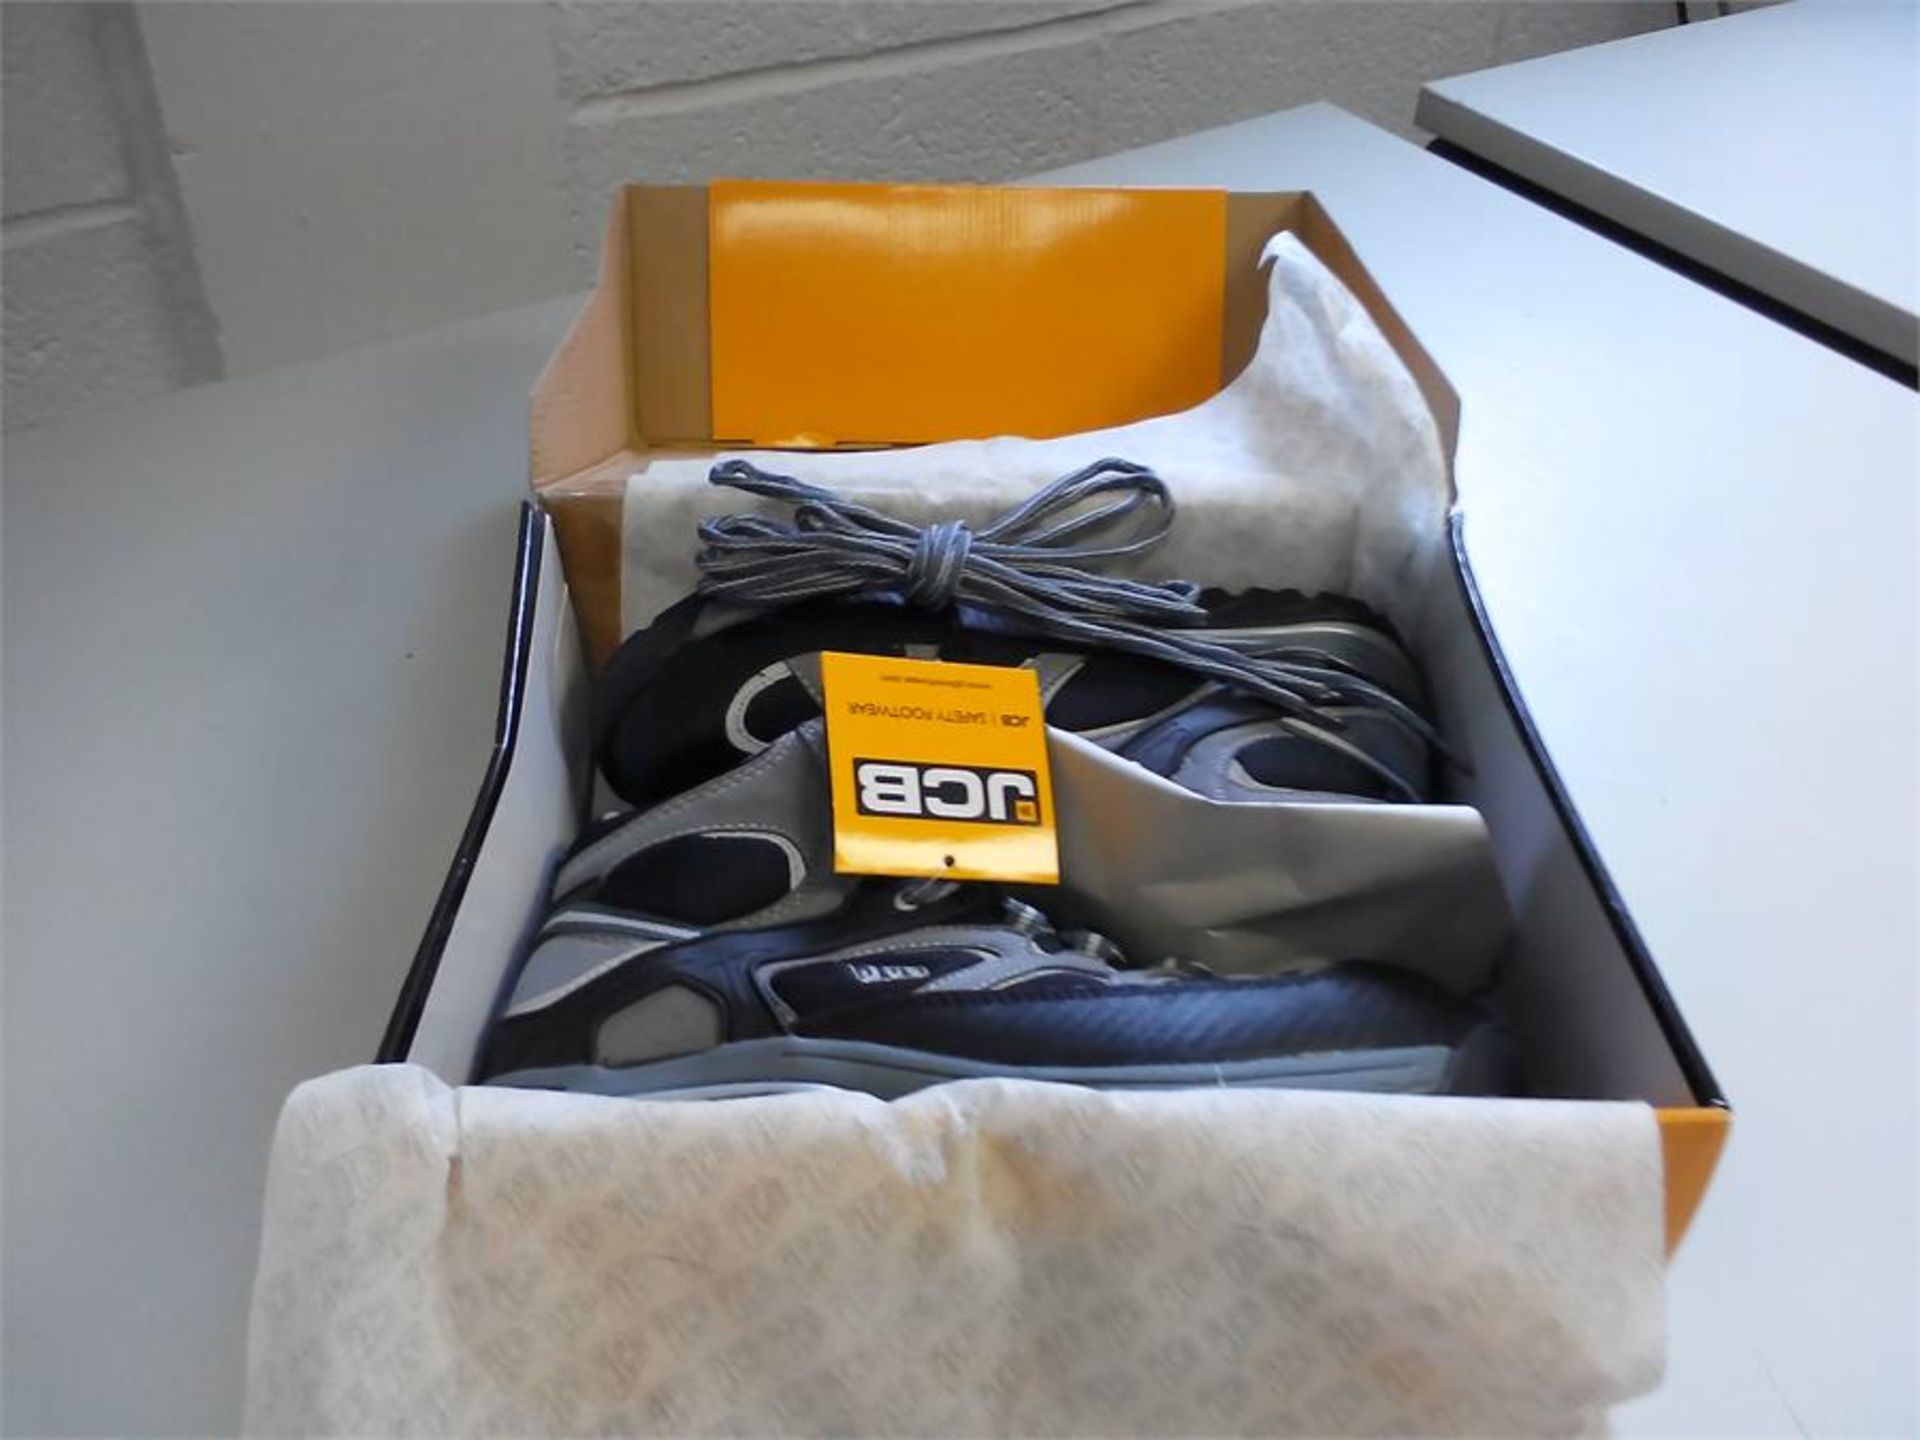 JCB Safety Boots NEW Boxed - RRP £40 - UK Size 8 / USA 9 / EURO 42 - Grey/Black Microfiber/Mesh